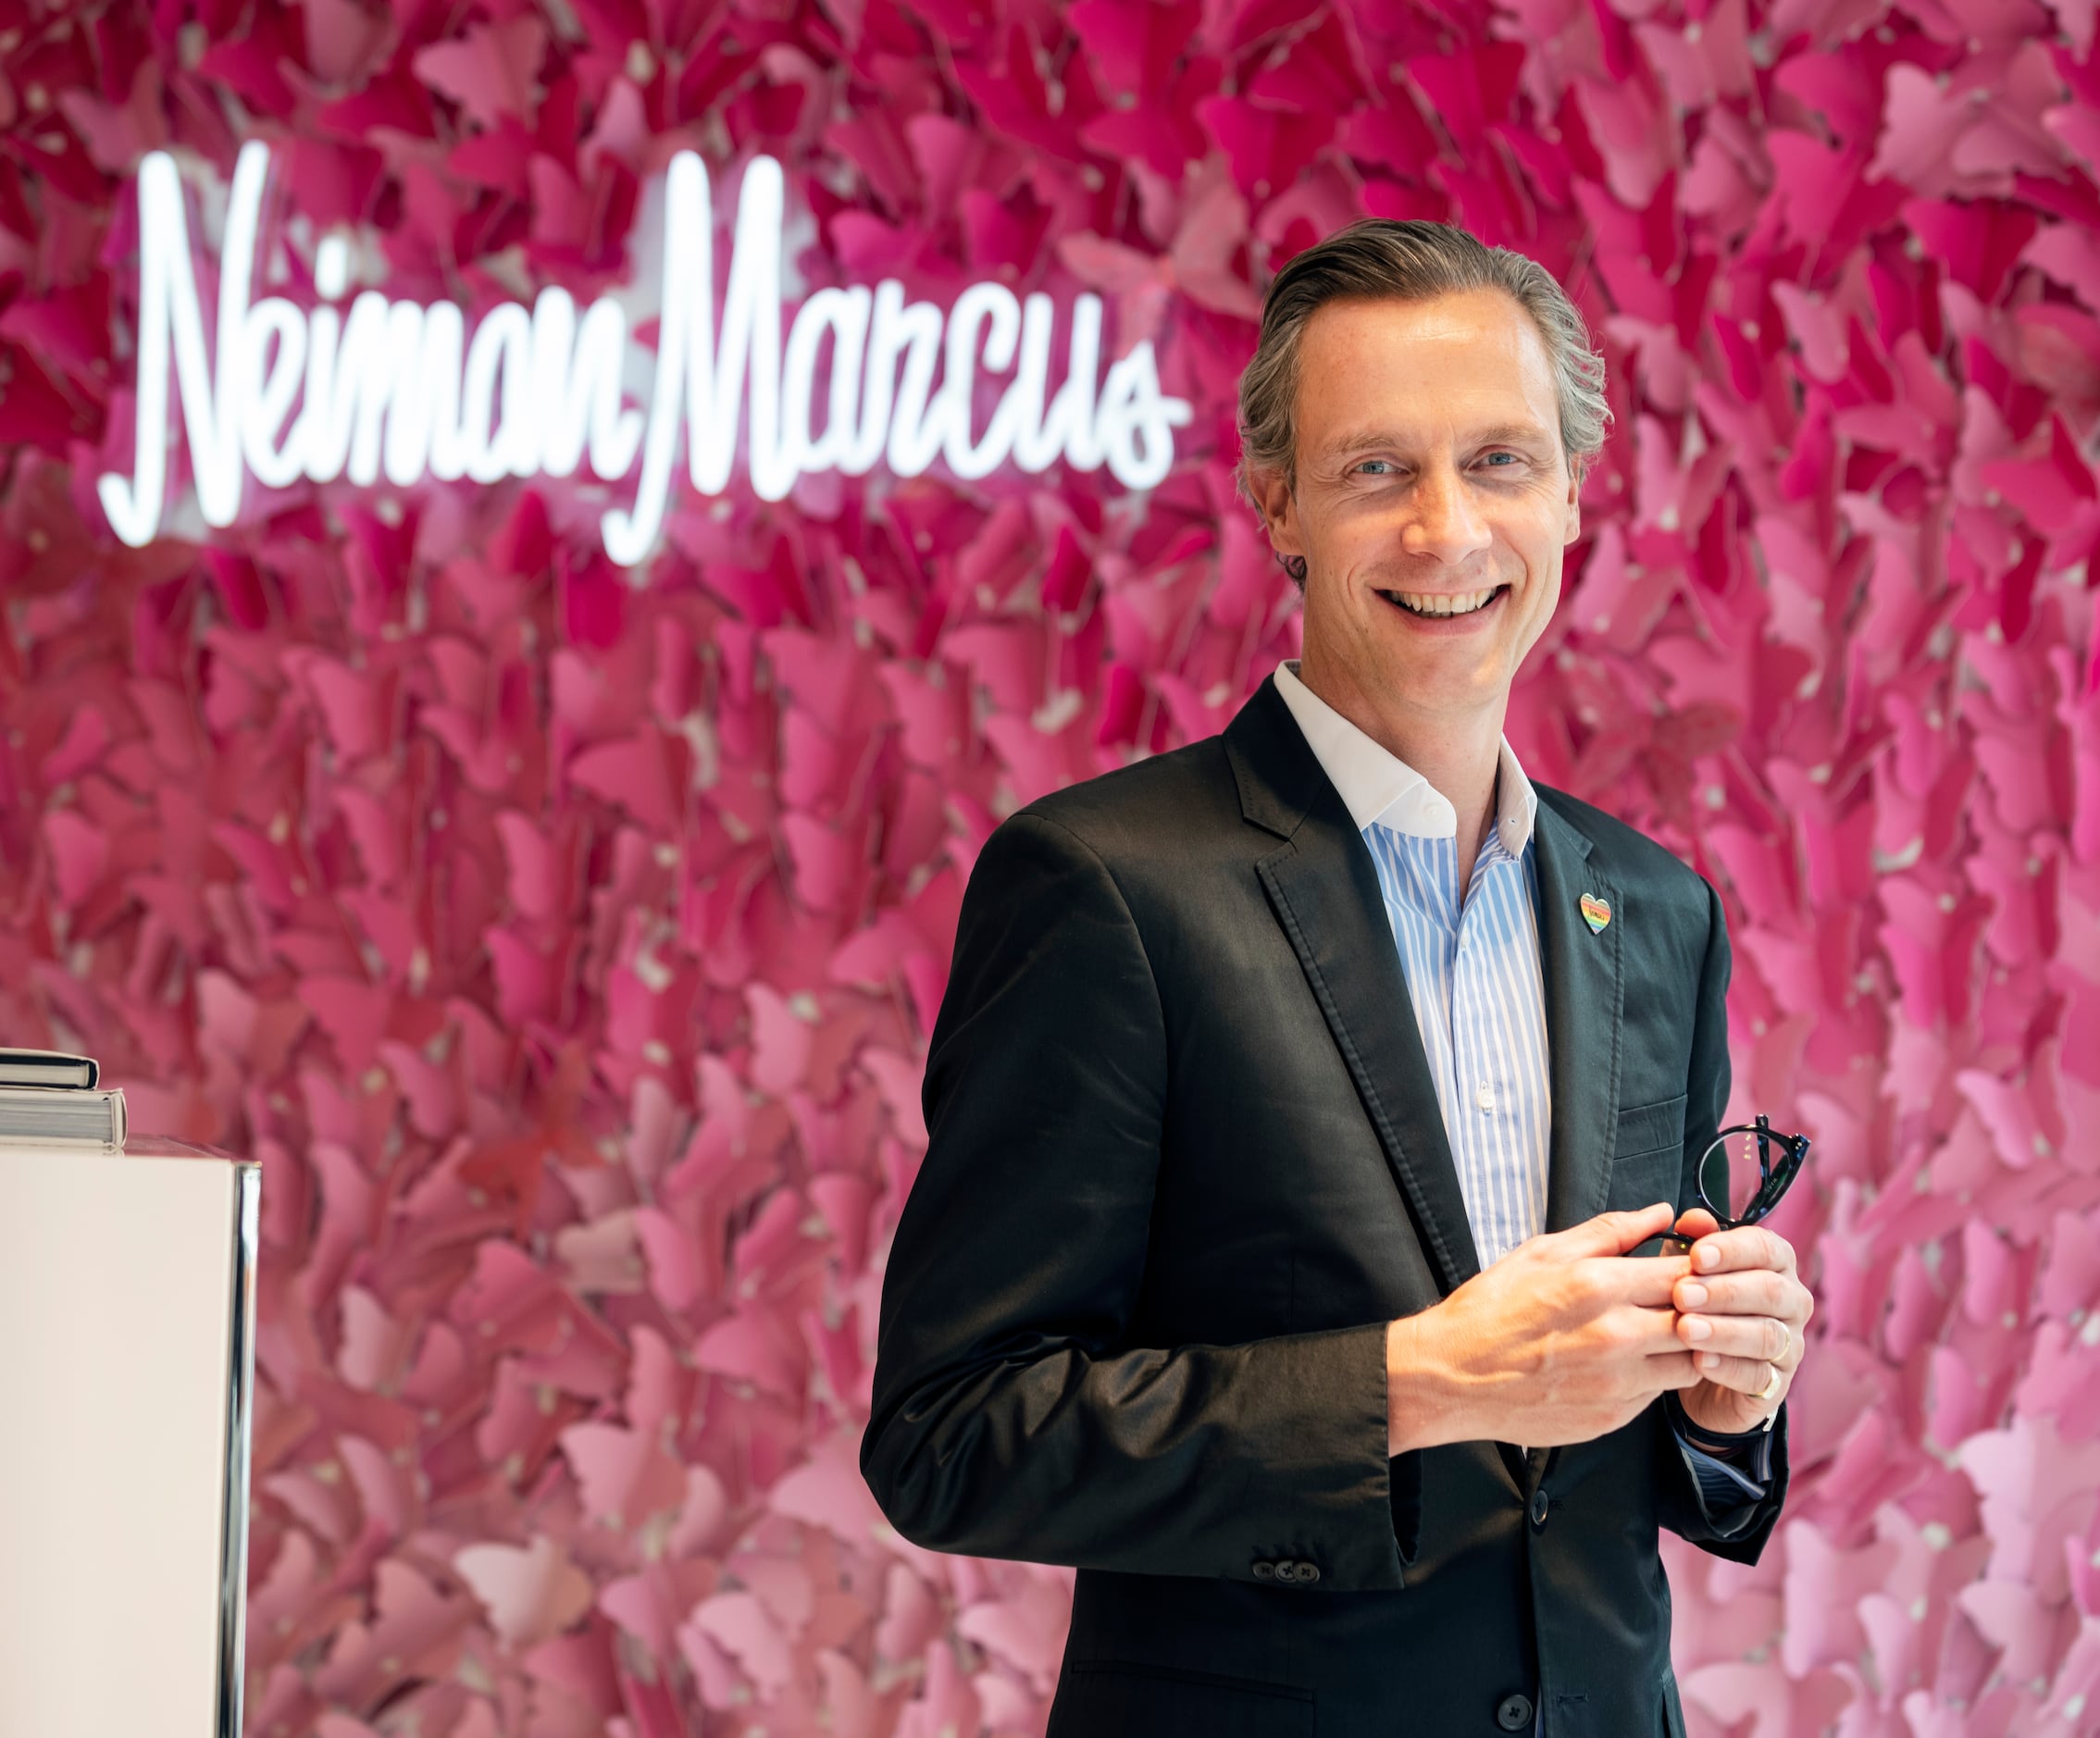 Neiman Marcus on Michigan Debuts Gleaming New Shoe Salon - Racked